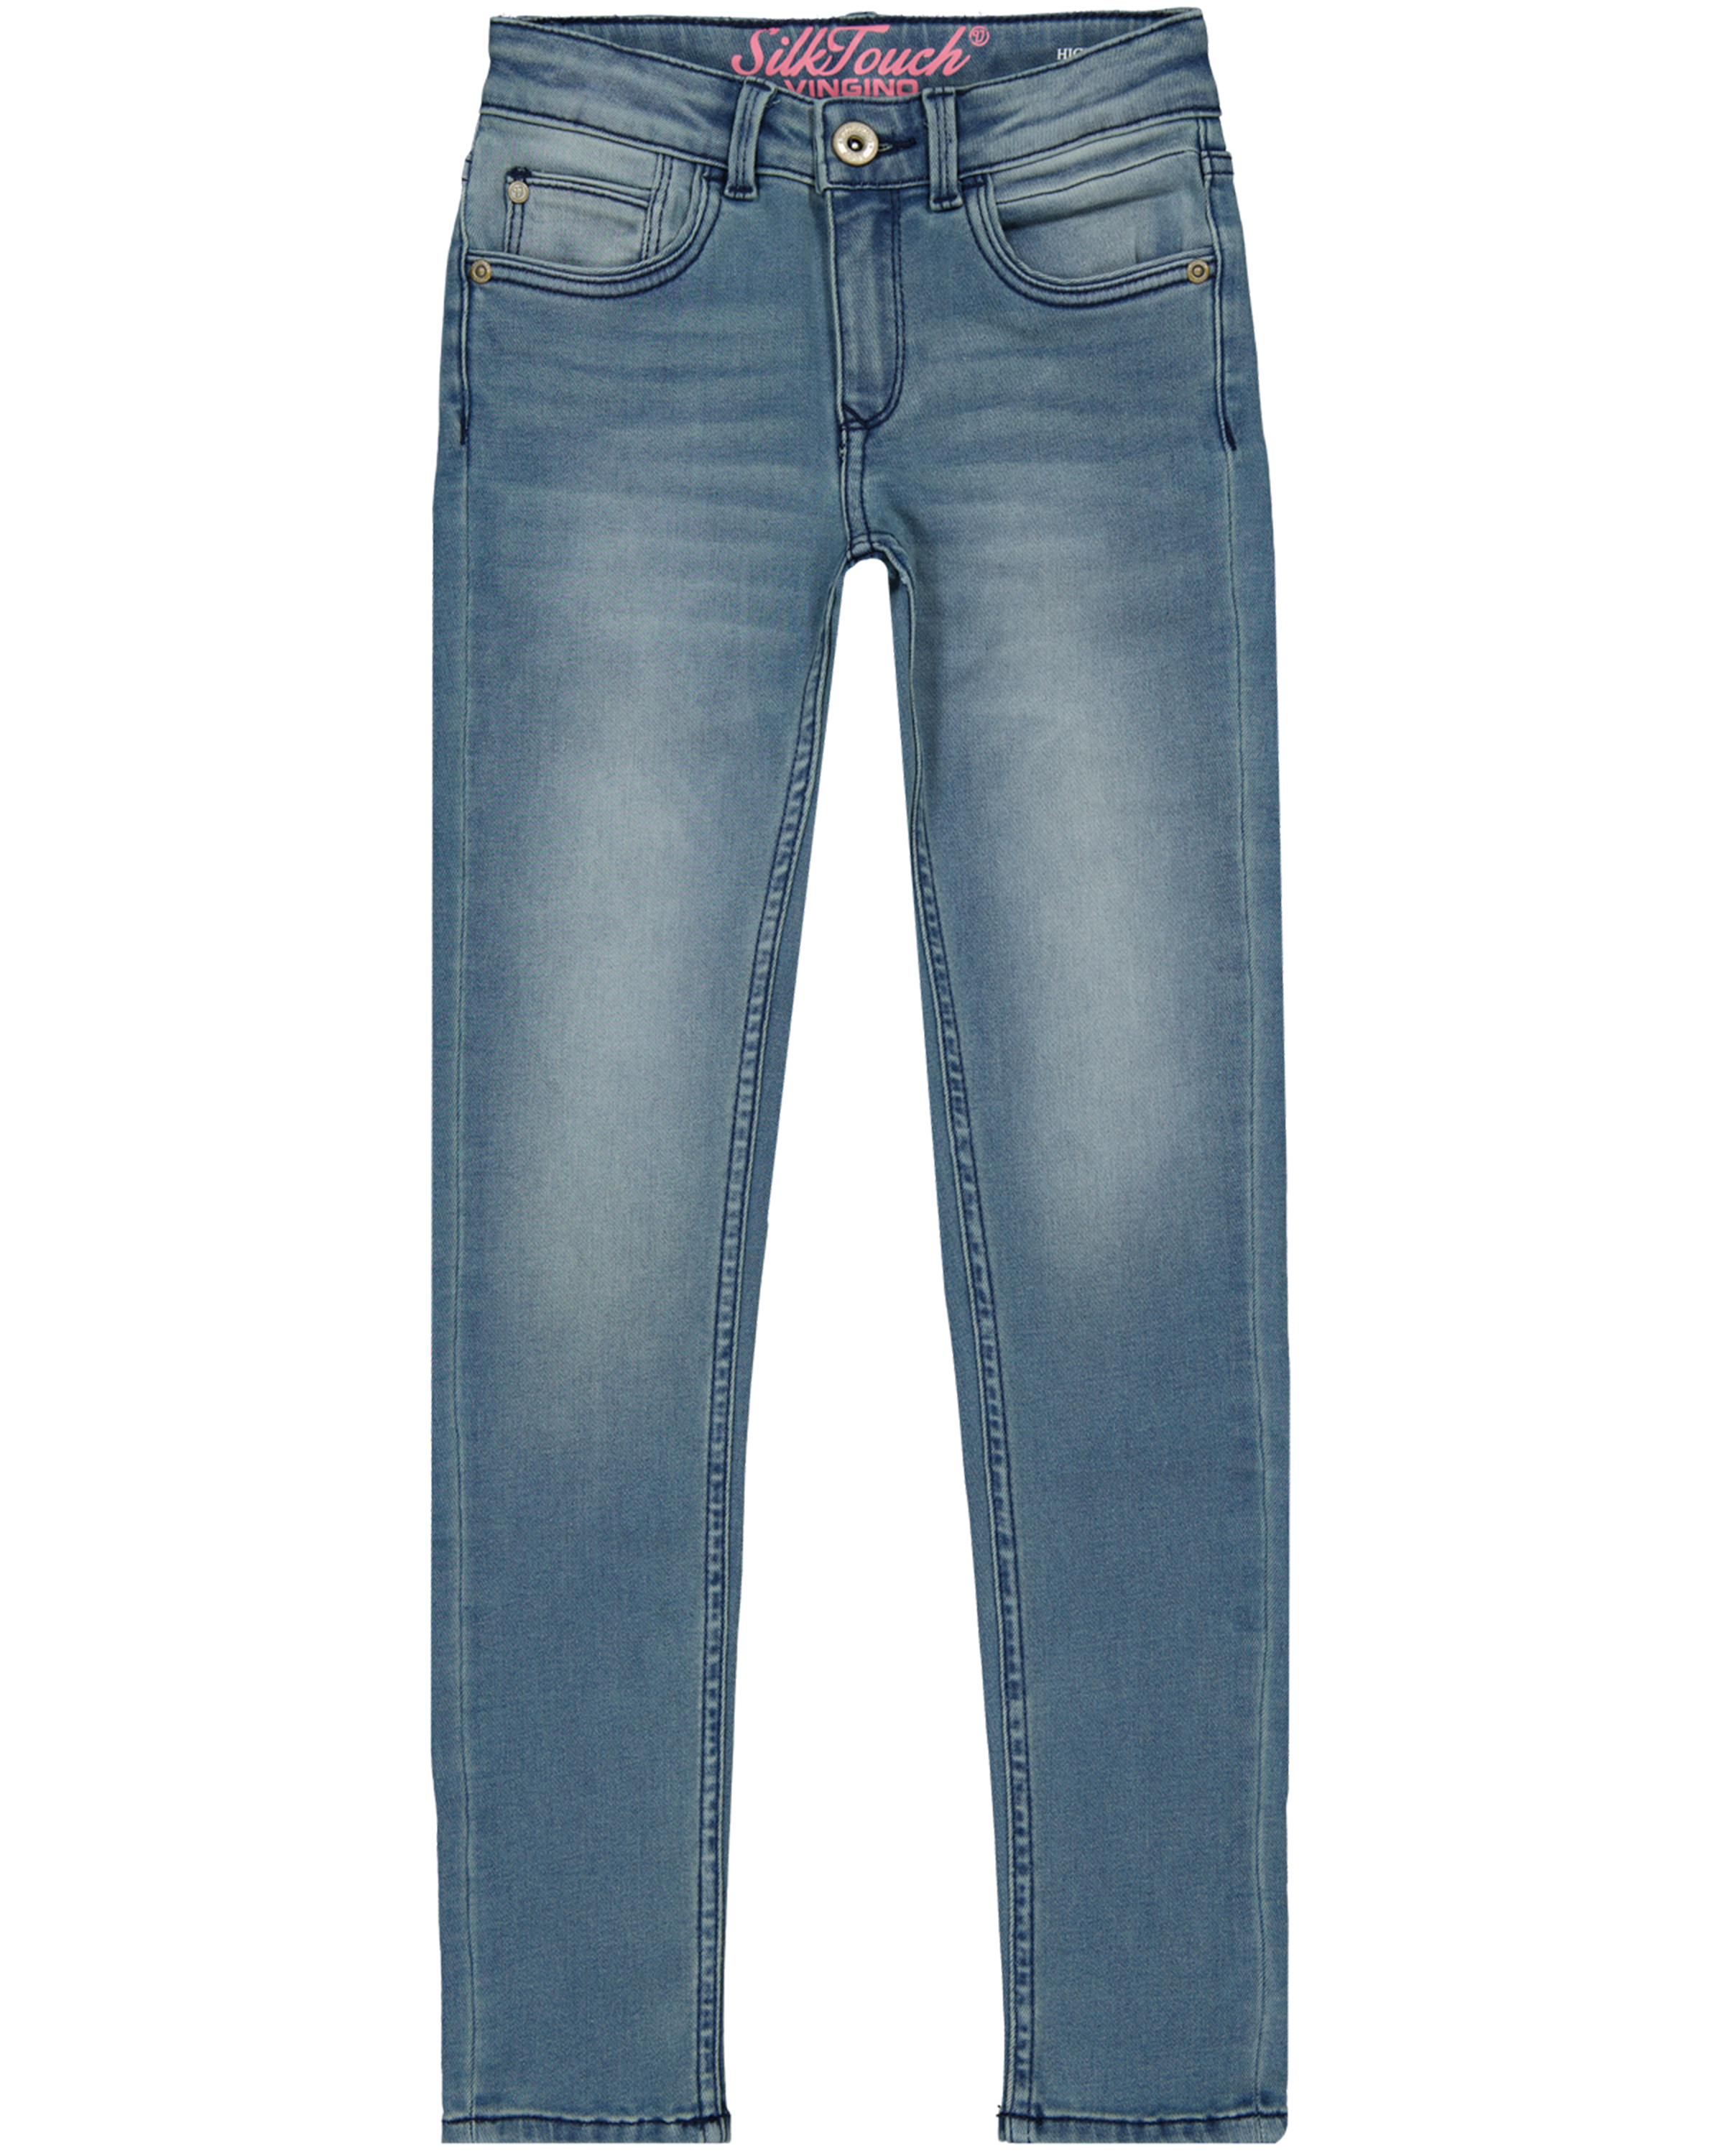 Mädchen Kinder Jeans Hose blau oder schwarz Grösse 98 bis 158 super bequem